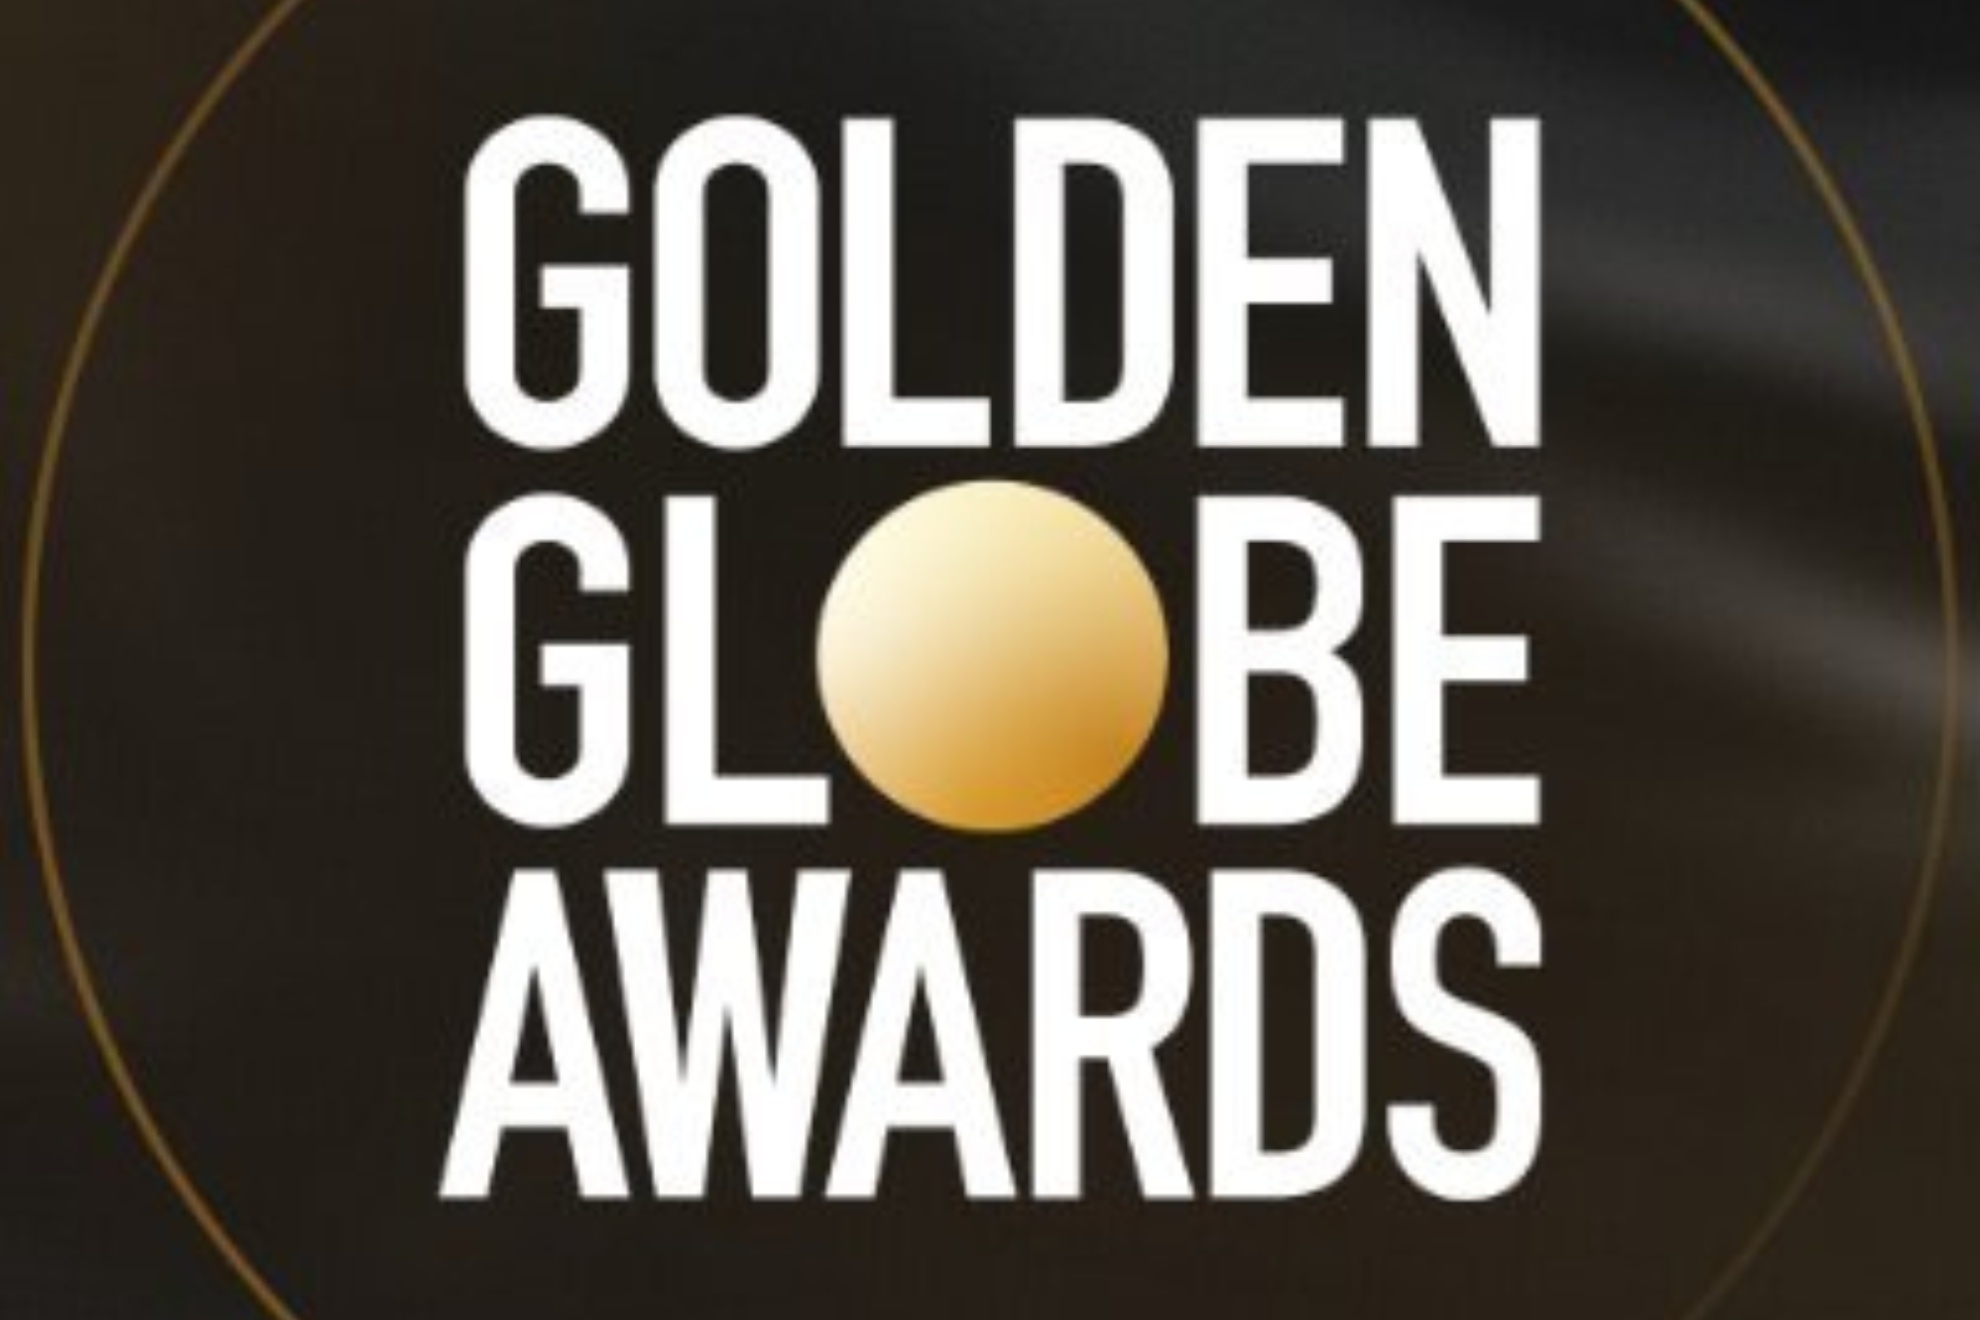 The Golden Globes kick off the film awards season.